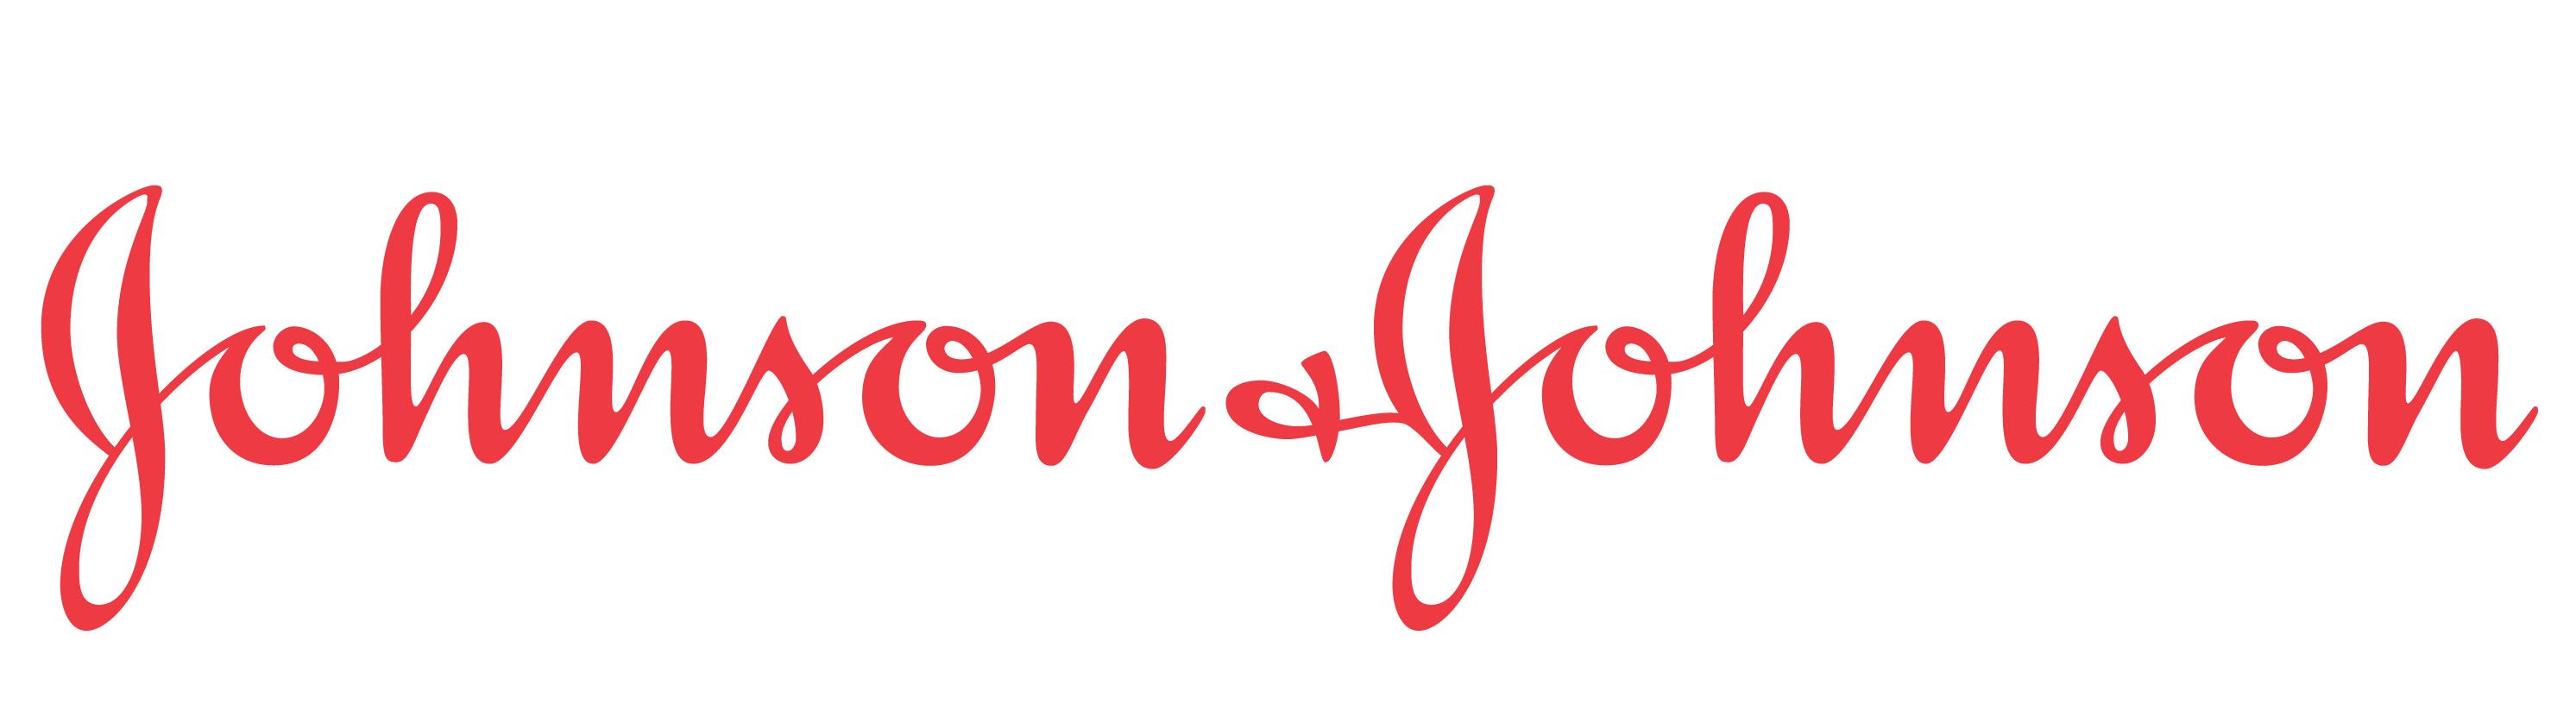 Johnson Logo - johnson-johnson-logo - CMMB